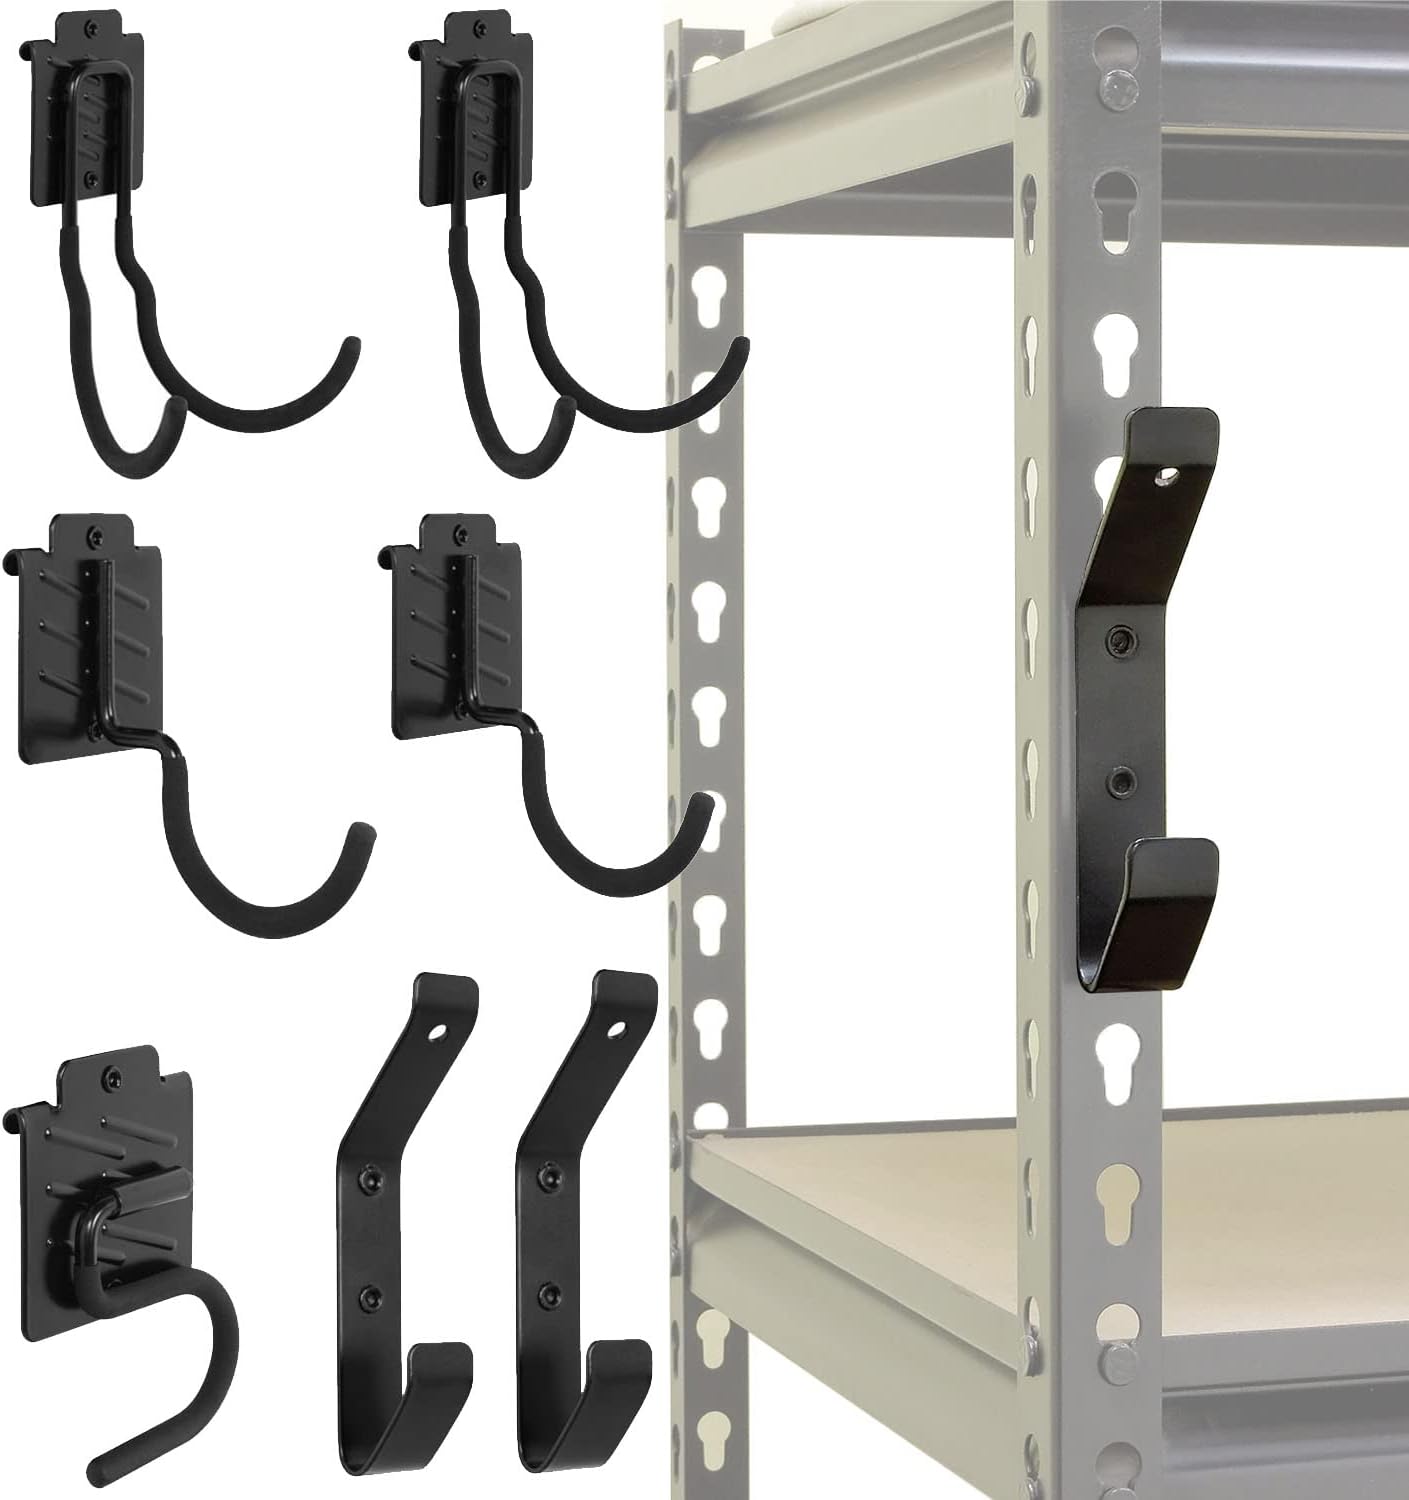 Wallmaster Shelving Hook Organizer Kit,7 Pcs Adjustable Boltless Steel Storage Hanging Accessories for Rack,Garage Tool System Heavy Duty